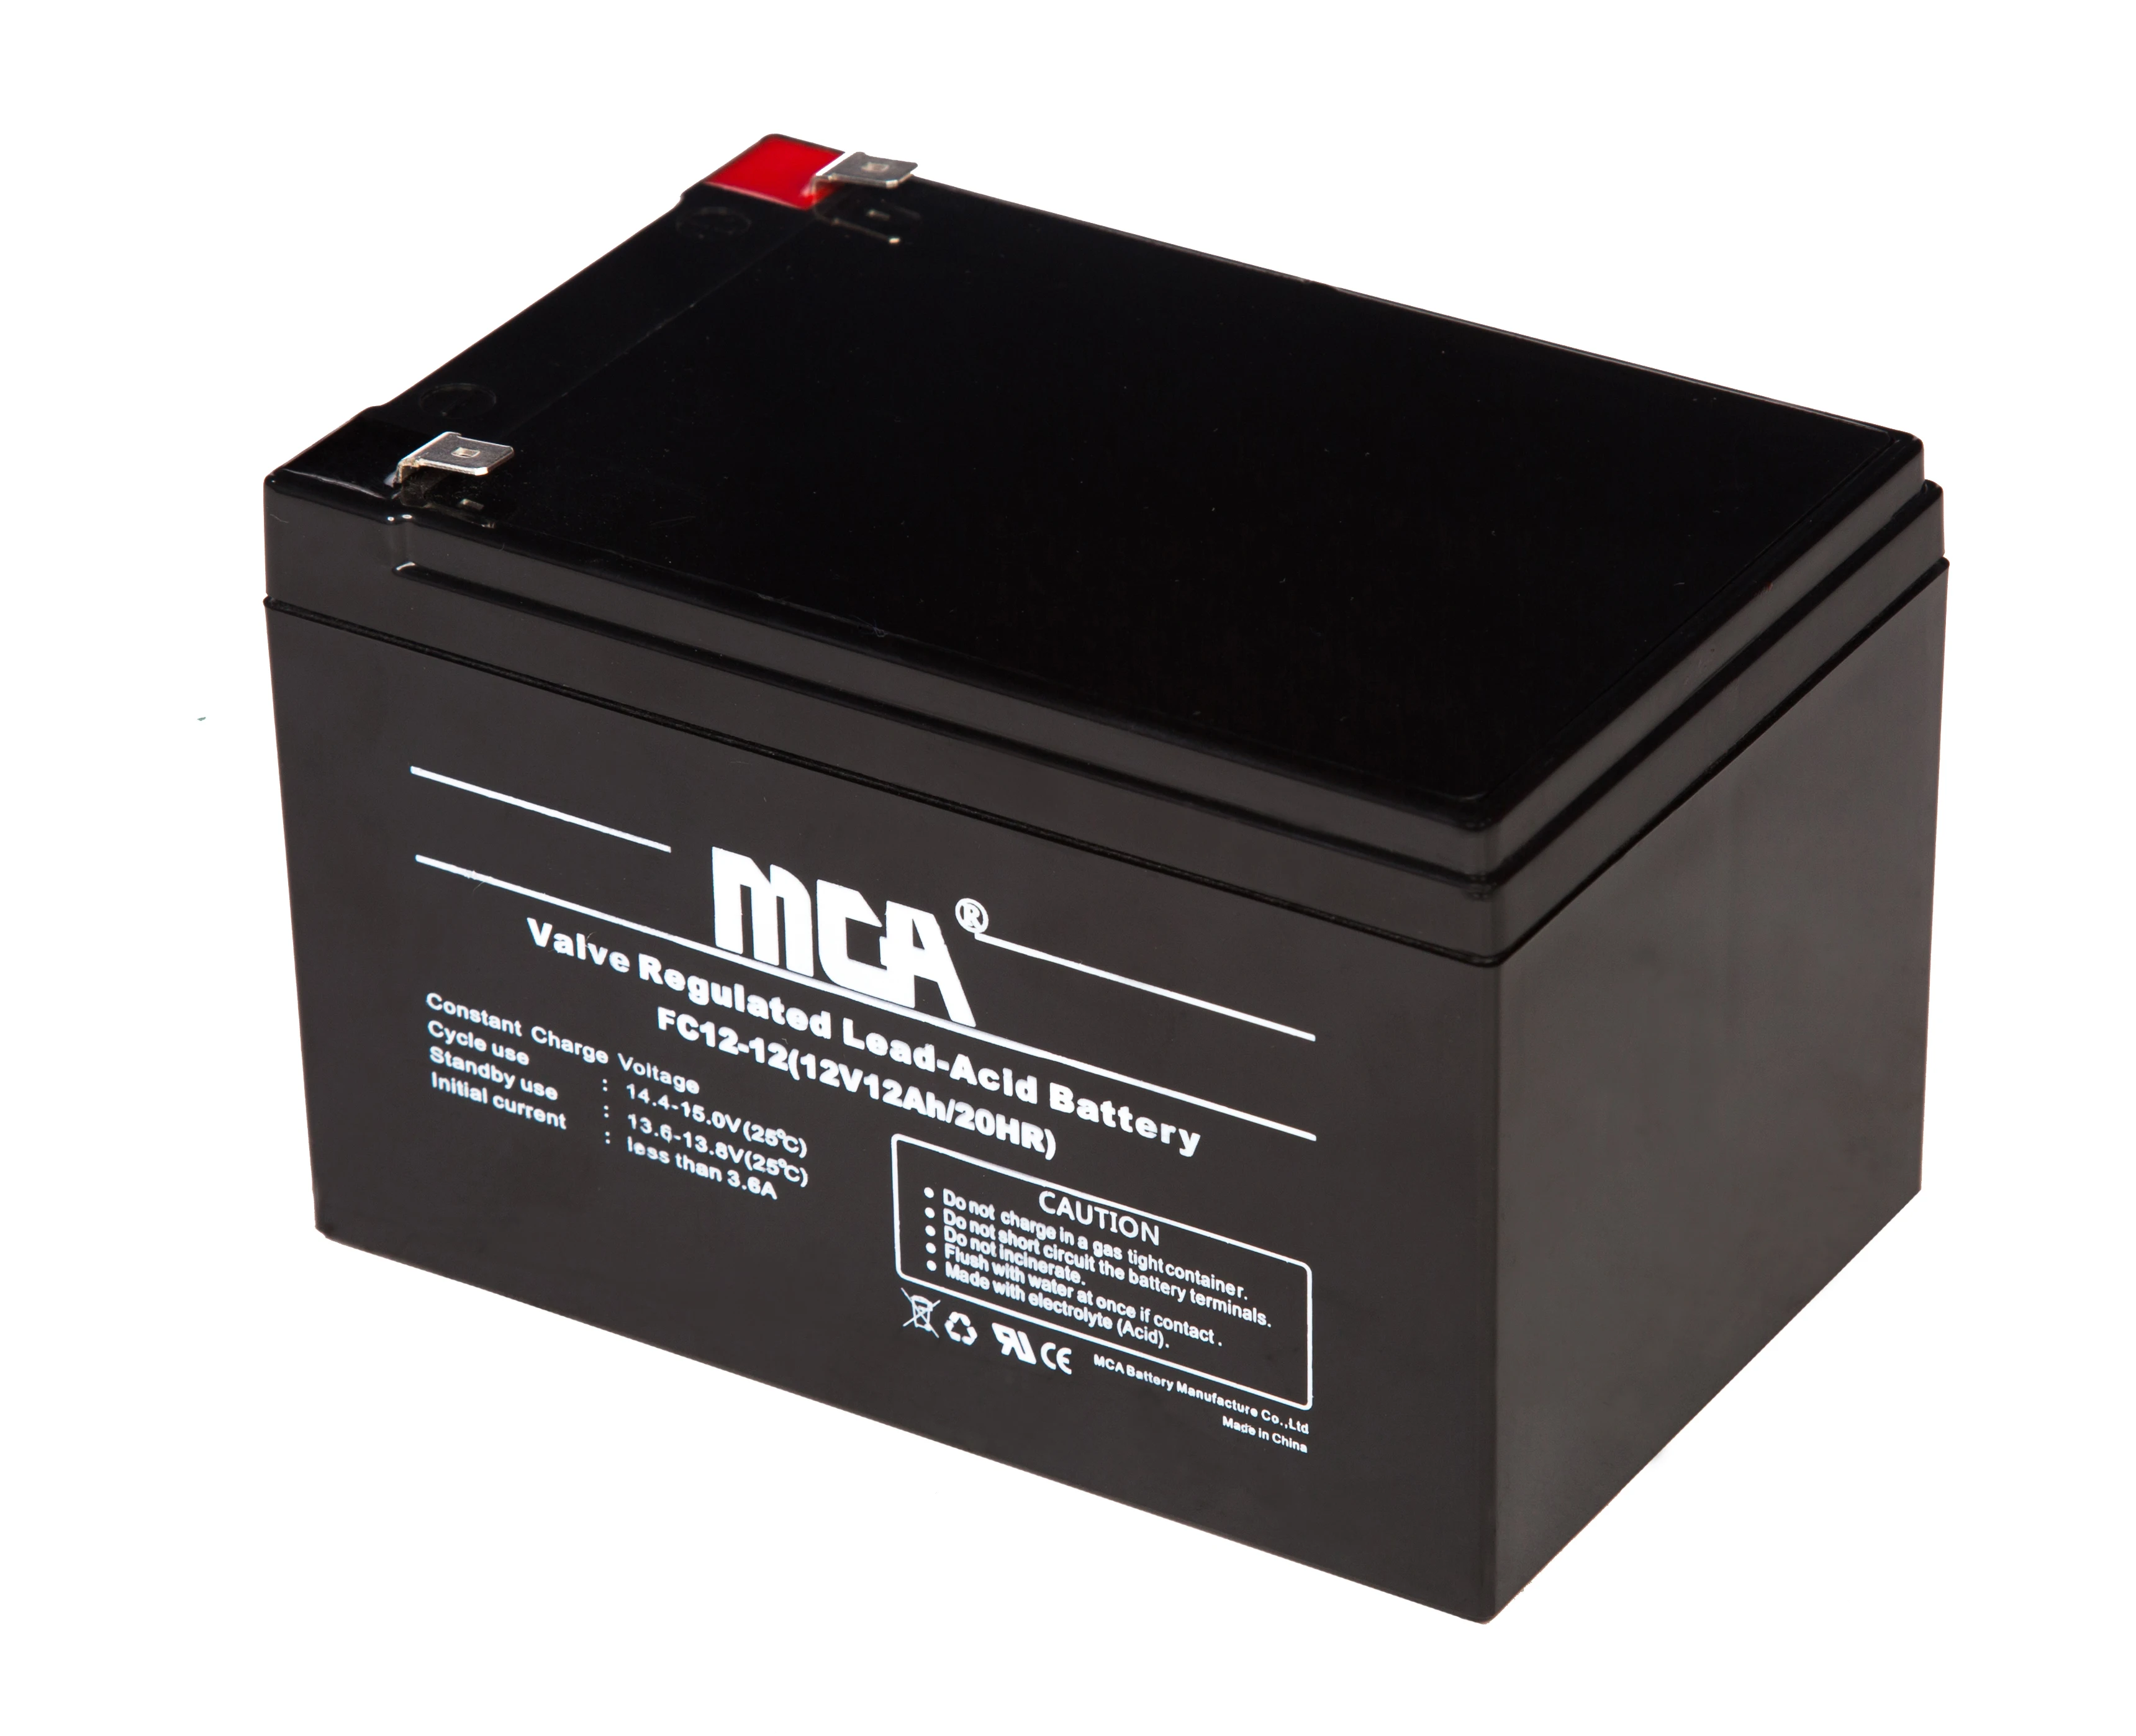 Hermetic Gel lead-acid Battery for ups ms5-12 capacity 5ah (12v) аккумуляторные батареи для ИБП. AGM Battery 12v 100ah ups. Hermetic Gel lead-acid Battery for ups ms30-12 capacity 30ah (12v) аккумуляторные батареи для ИБП. AGM VRLA Battery 12v 7ah. Finepower agm 12v